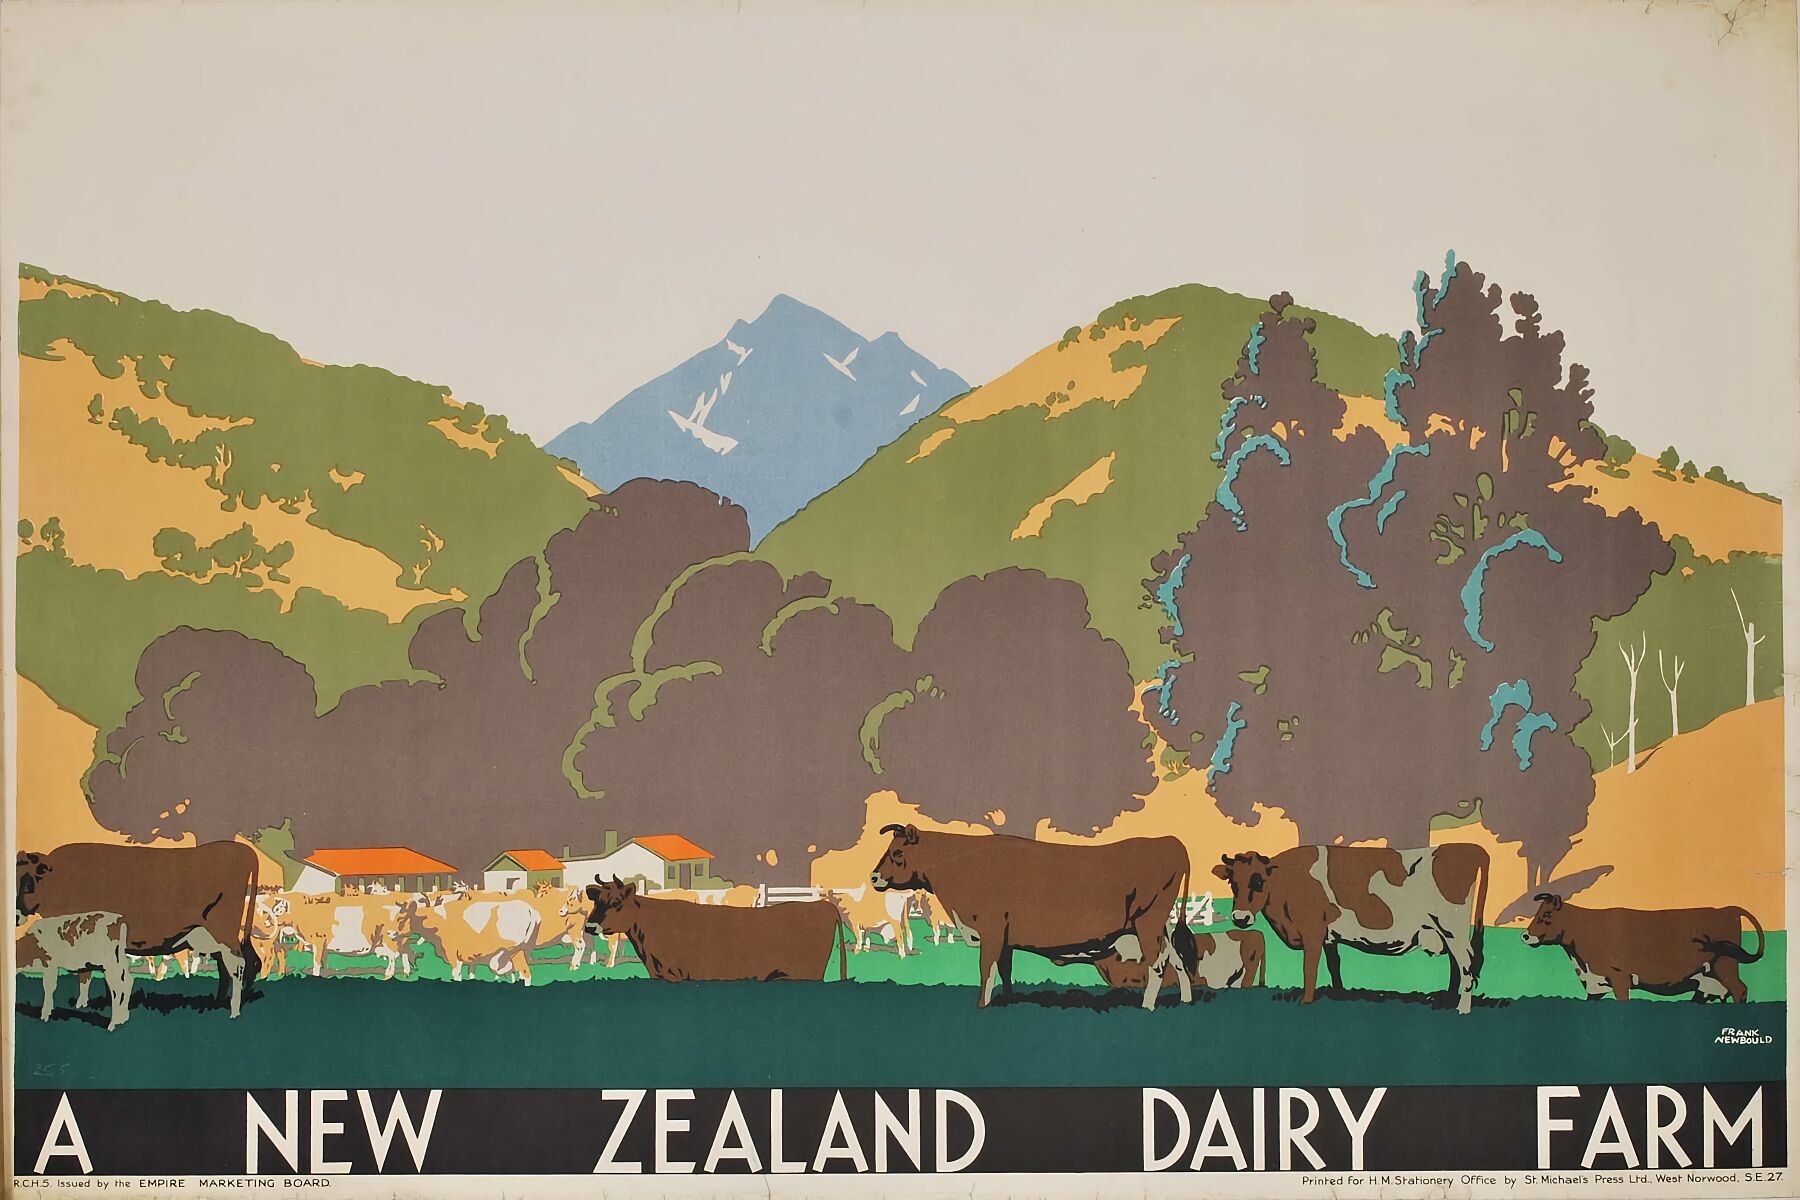 A New Zealand Dairy Farm by Frank Newbould - c.1927